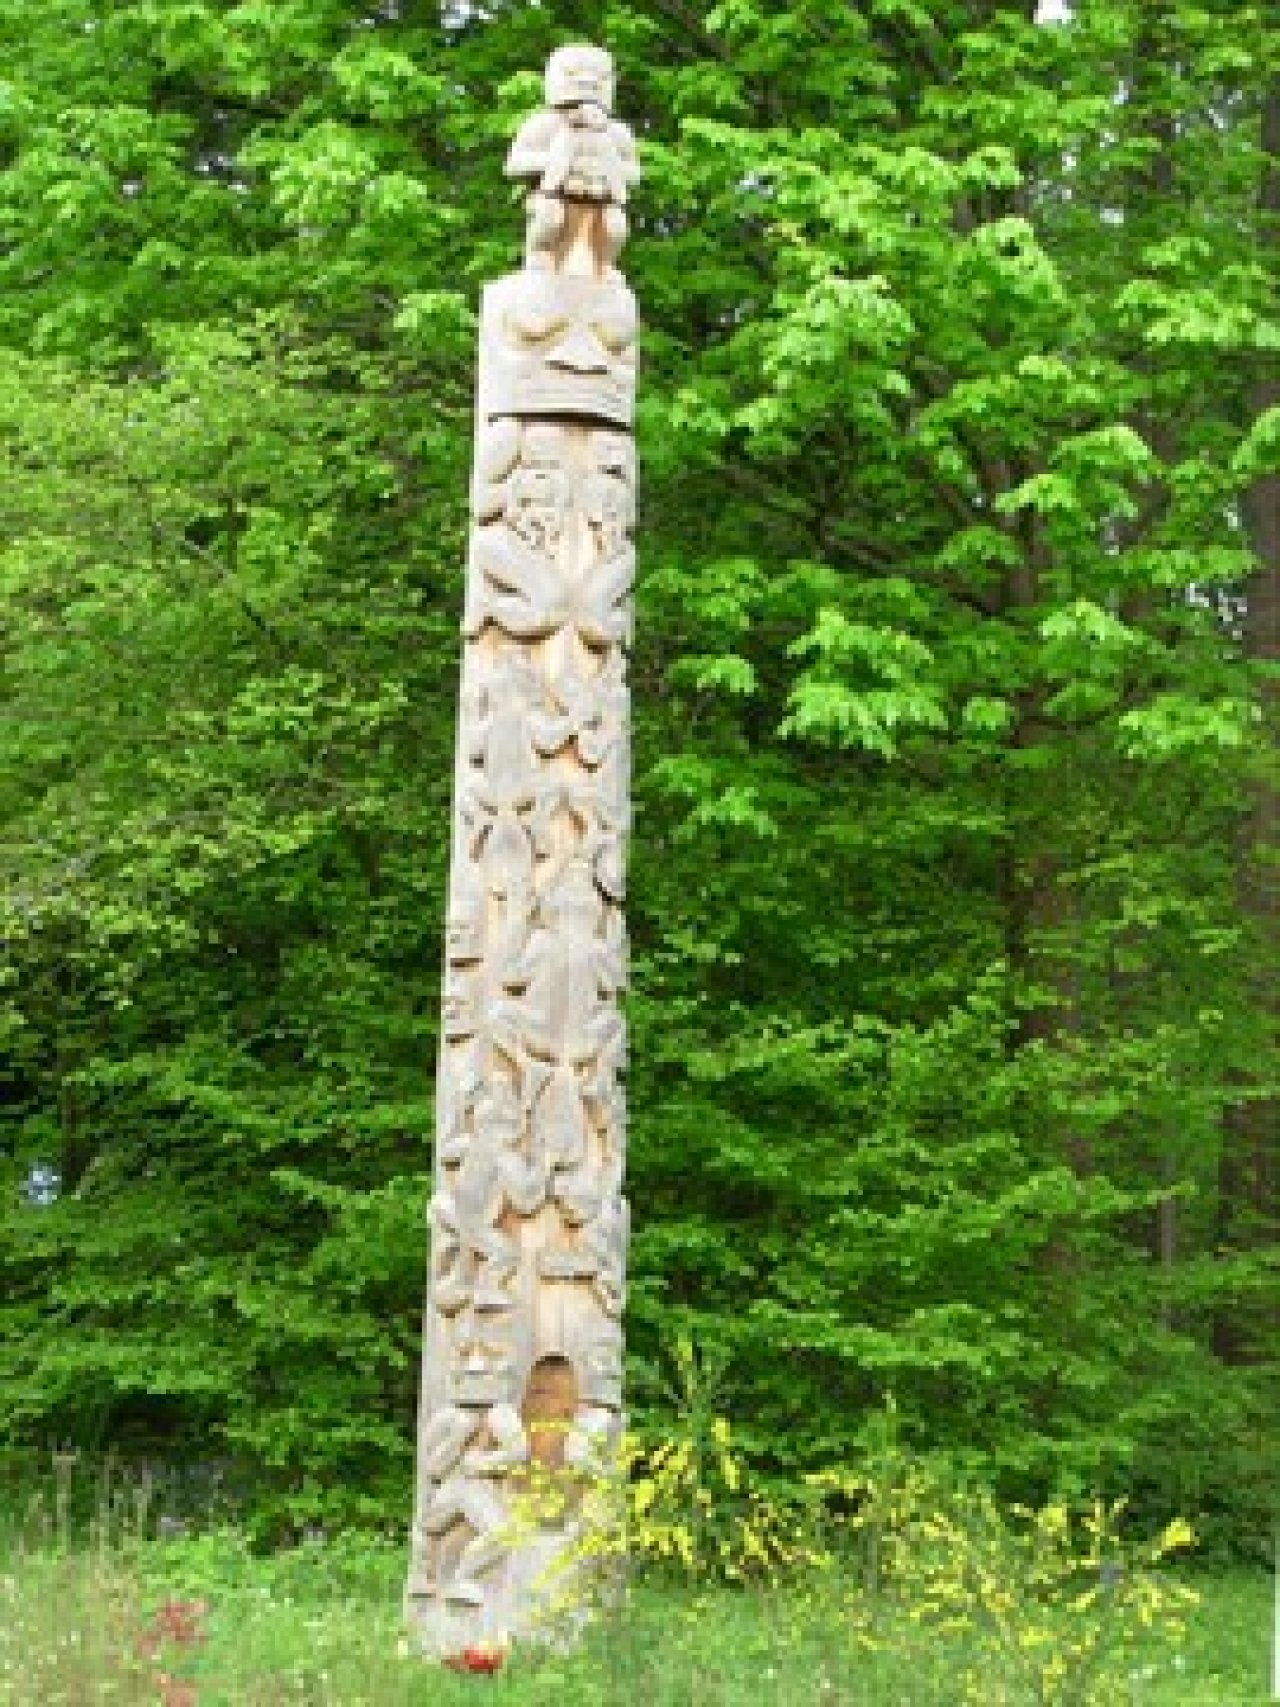 Beaver Crest Totem Pole
Source: http://stanleyparkvan.com/stanley-park-van-attractions-totem-poles.html